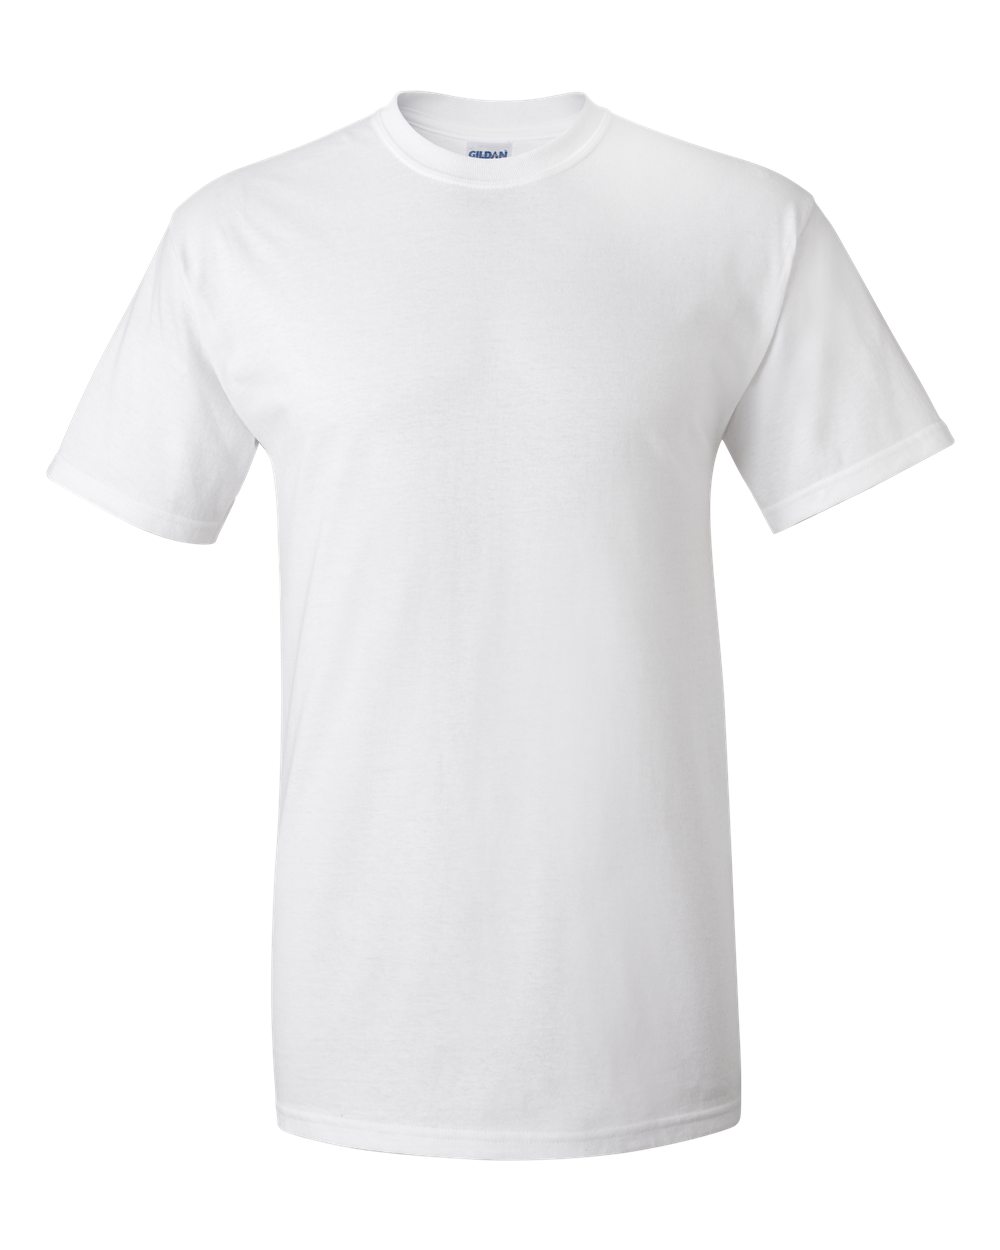 "Build A Tee" Dark Colors - Gildan Short Sleeve Blank T-Shirt